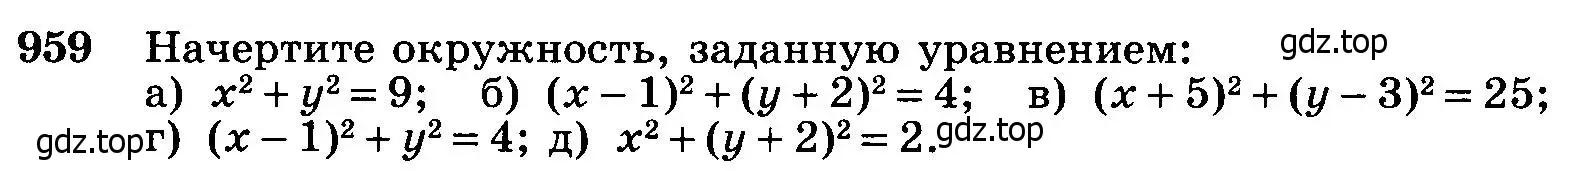 Условие номер 959 (страница 240) гдз по геометрии 7-9 класс Атанасян, Бутузов, учебник